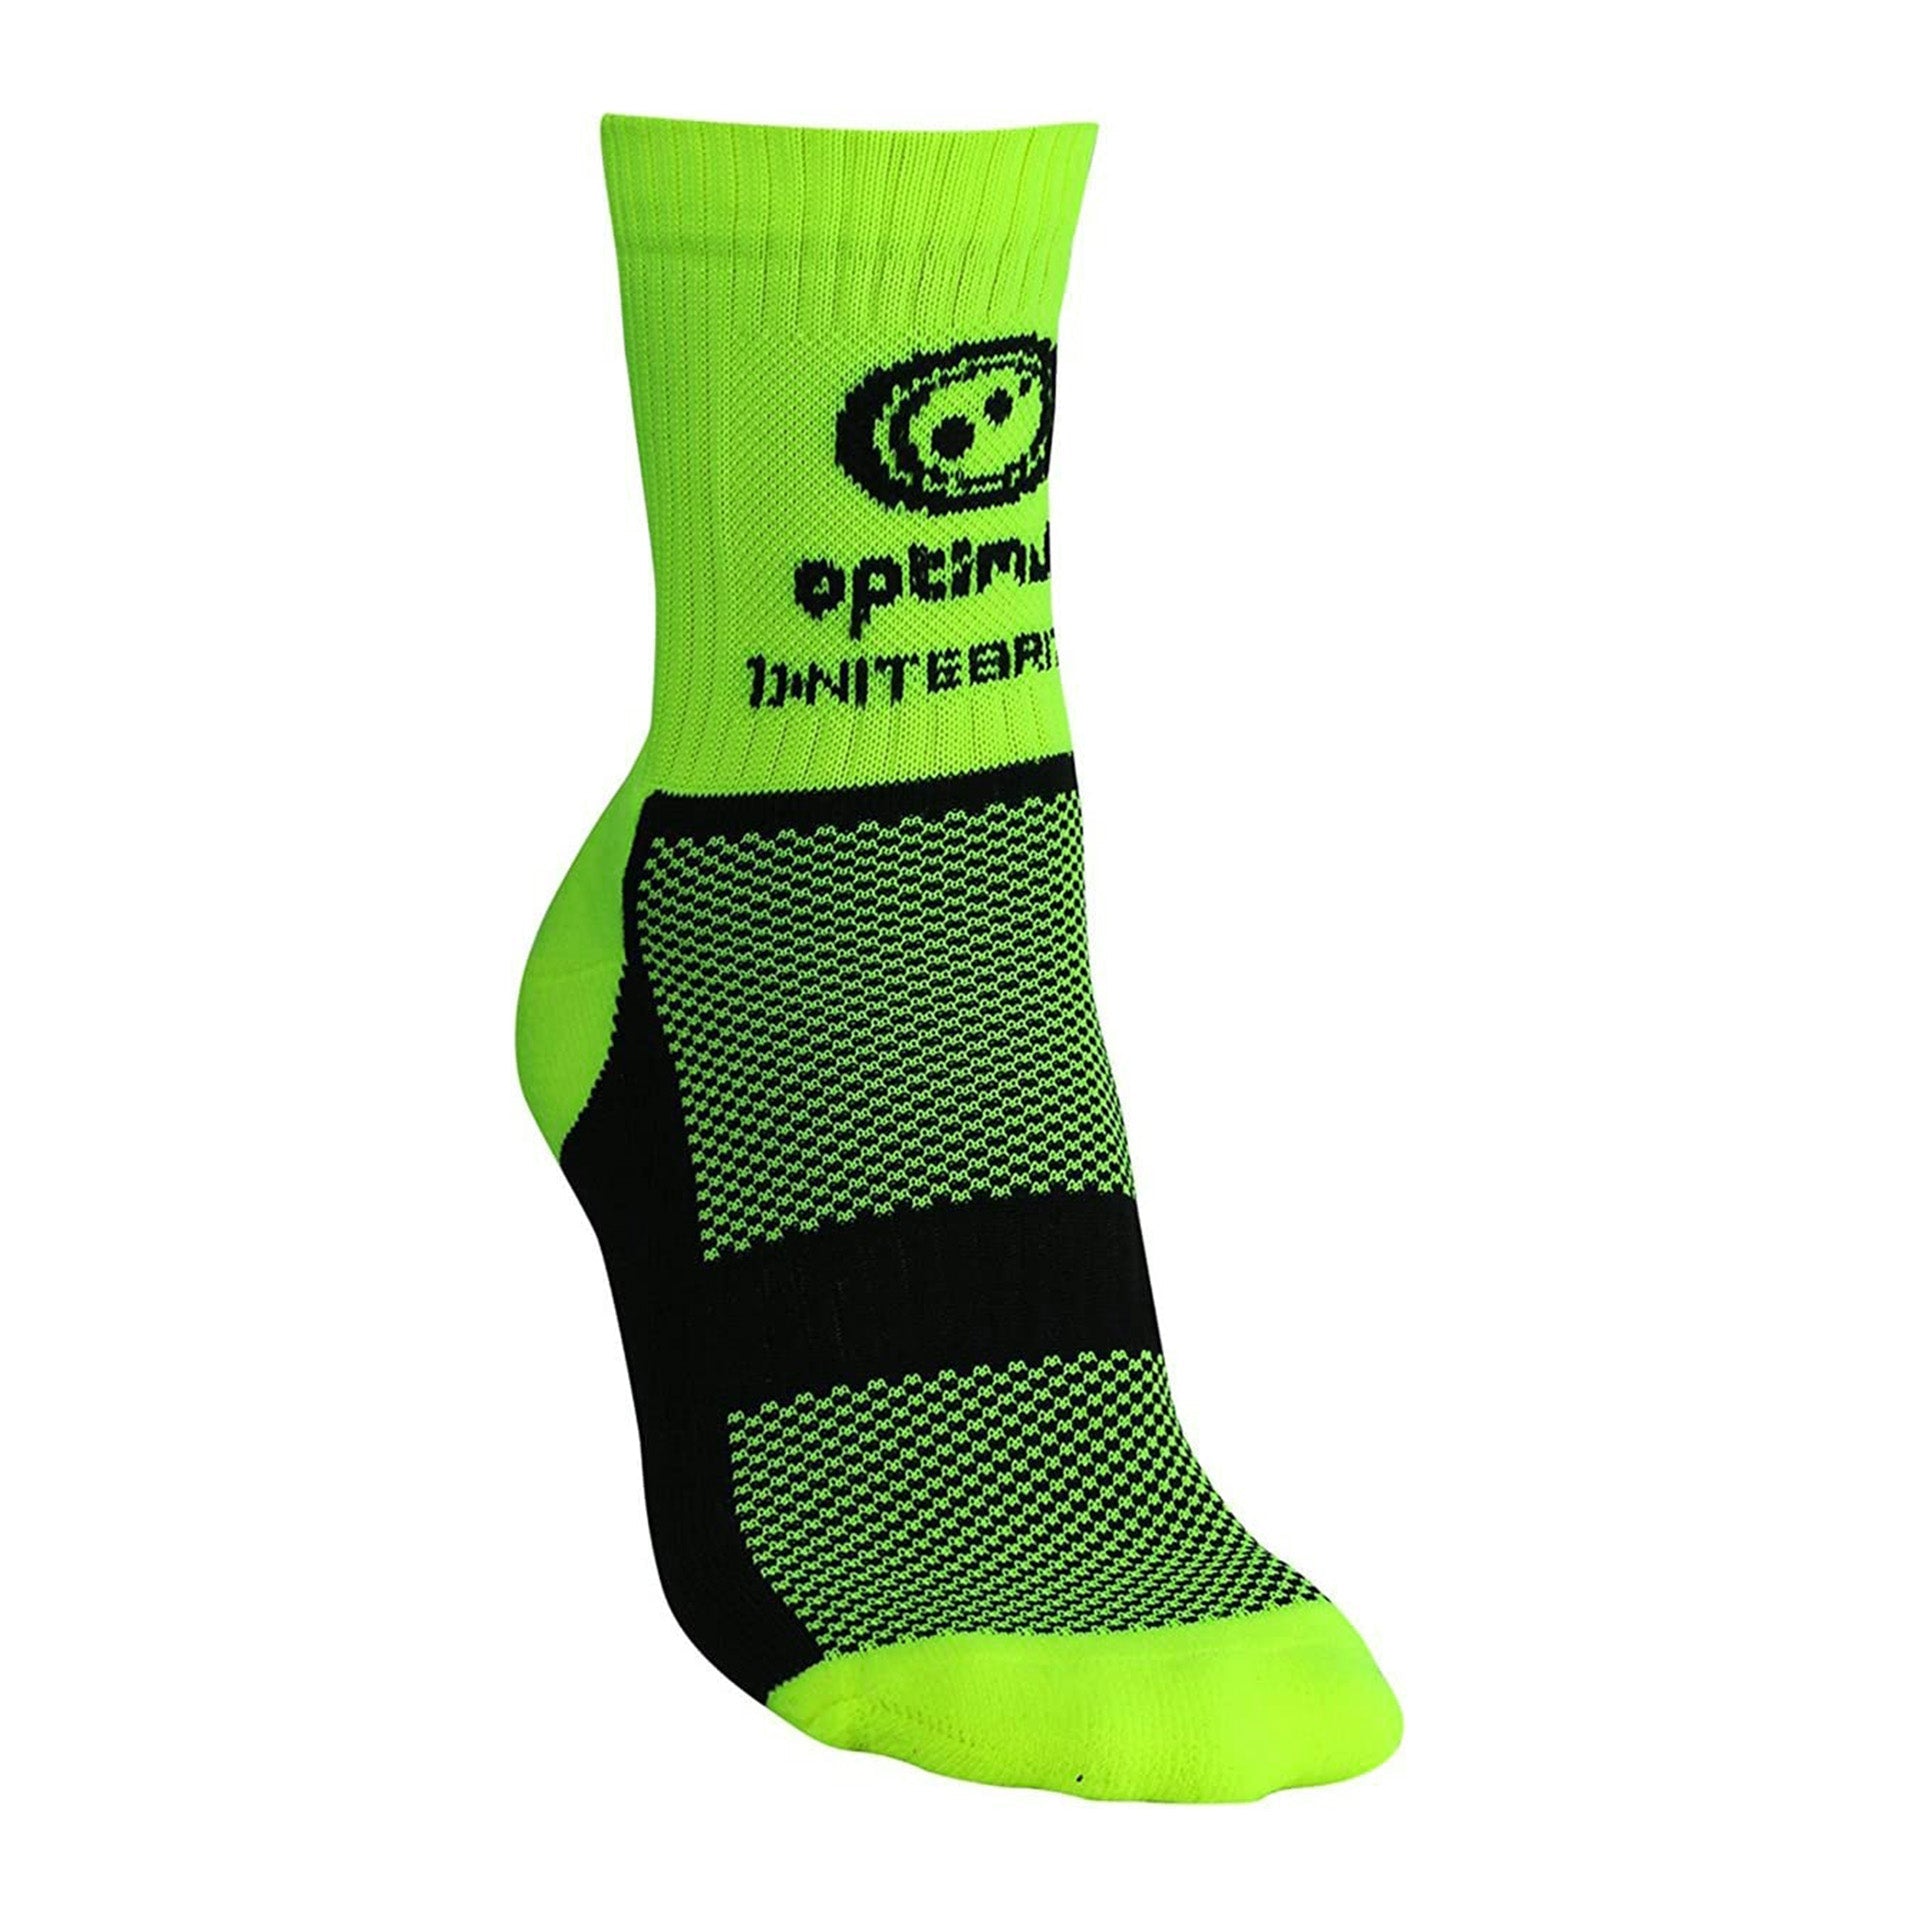 Nitebrite Cycling Socks Fluro Green - Optimum